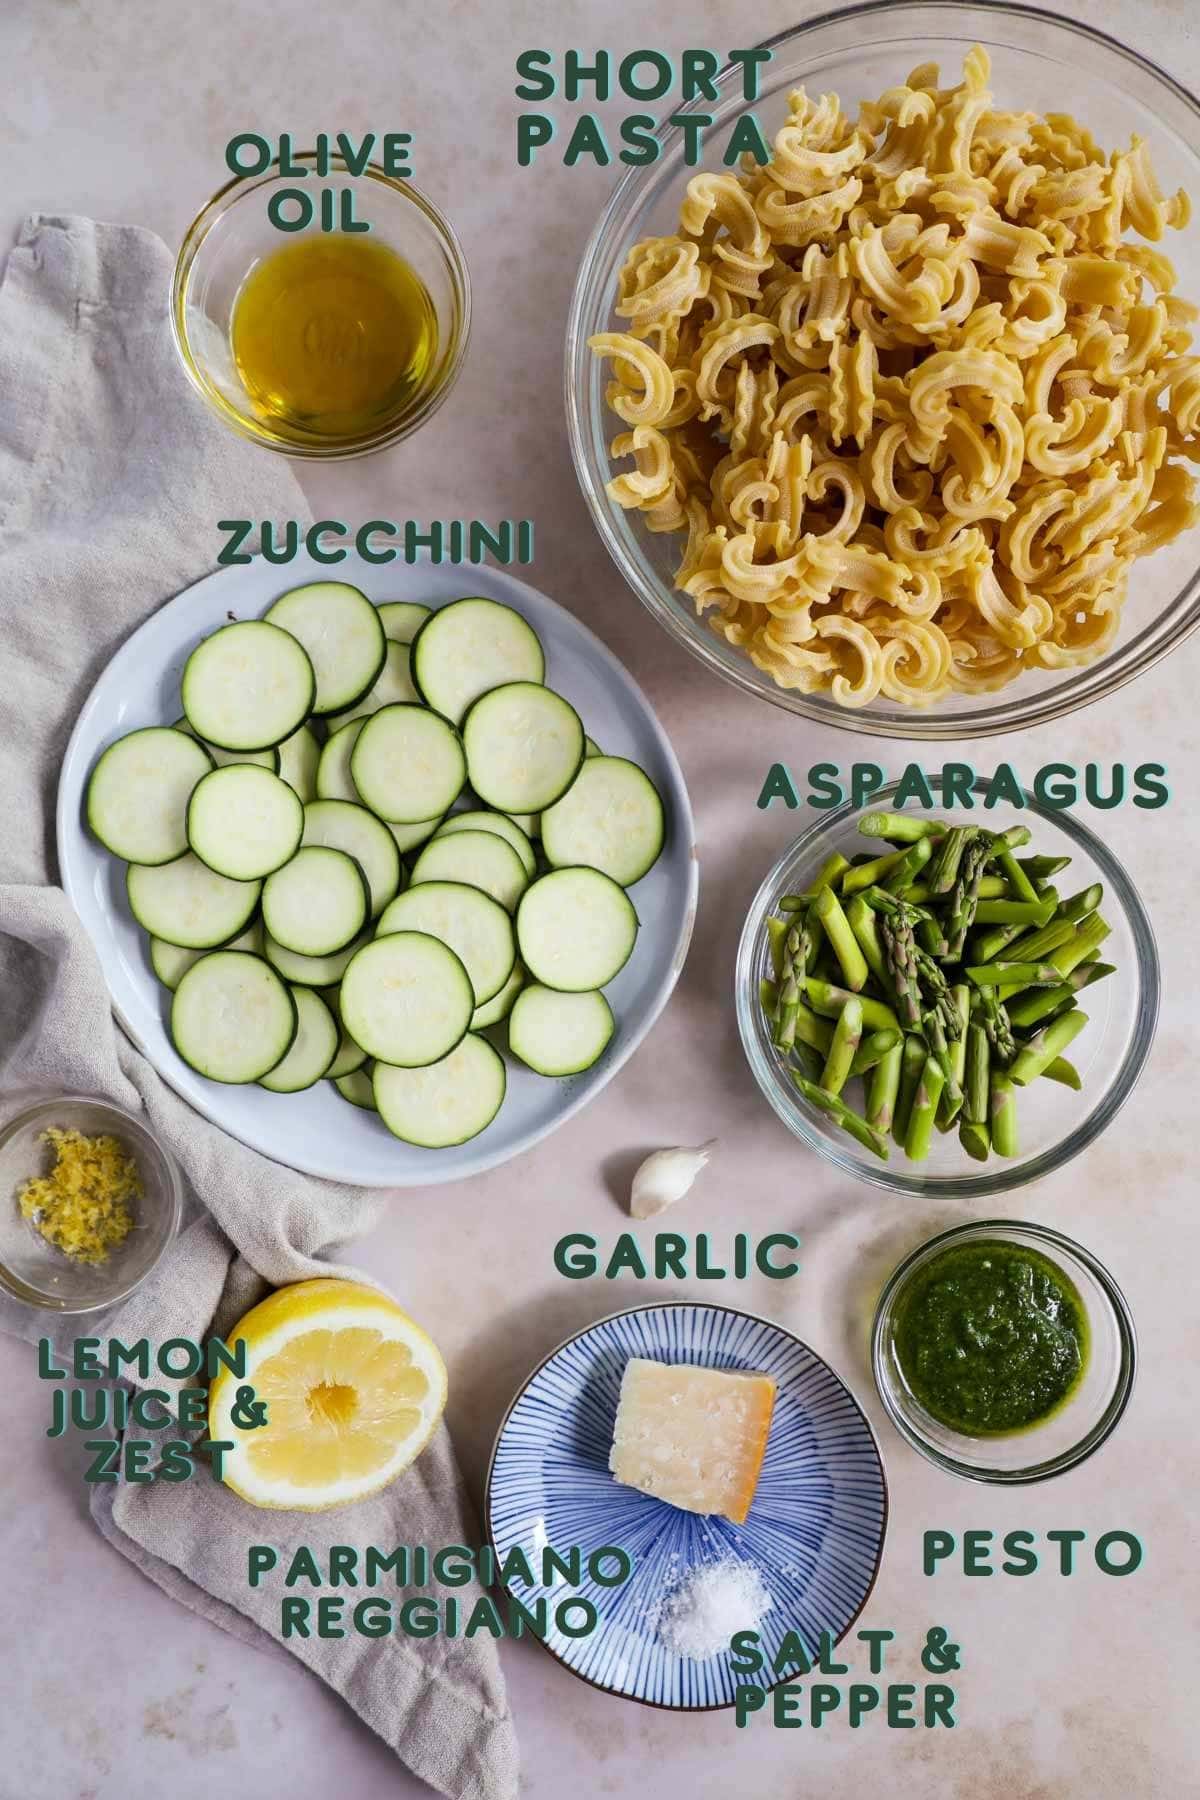 Ingredients to make veggie pesto pasta, including pesto, short pasta, olive oil, zucchini, garlic, asparagus, lemon zest and juice, and optional parmigiano-reggiano.